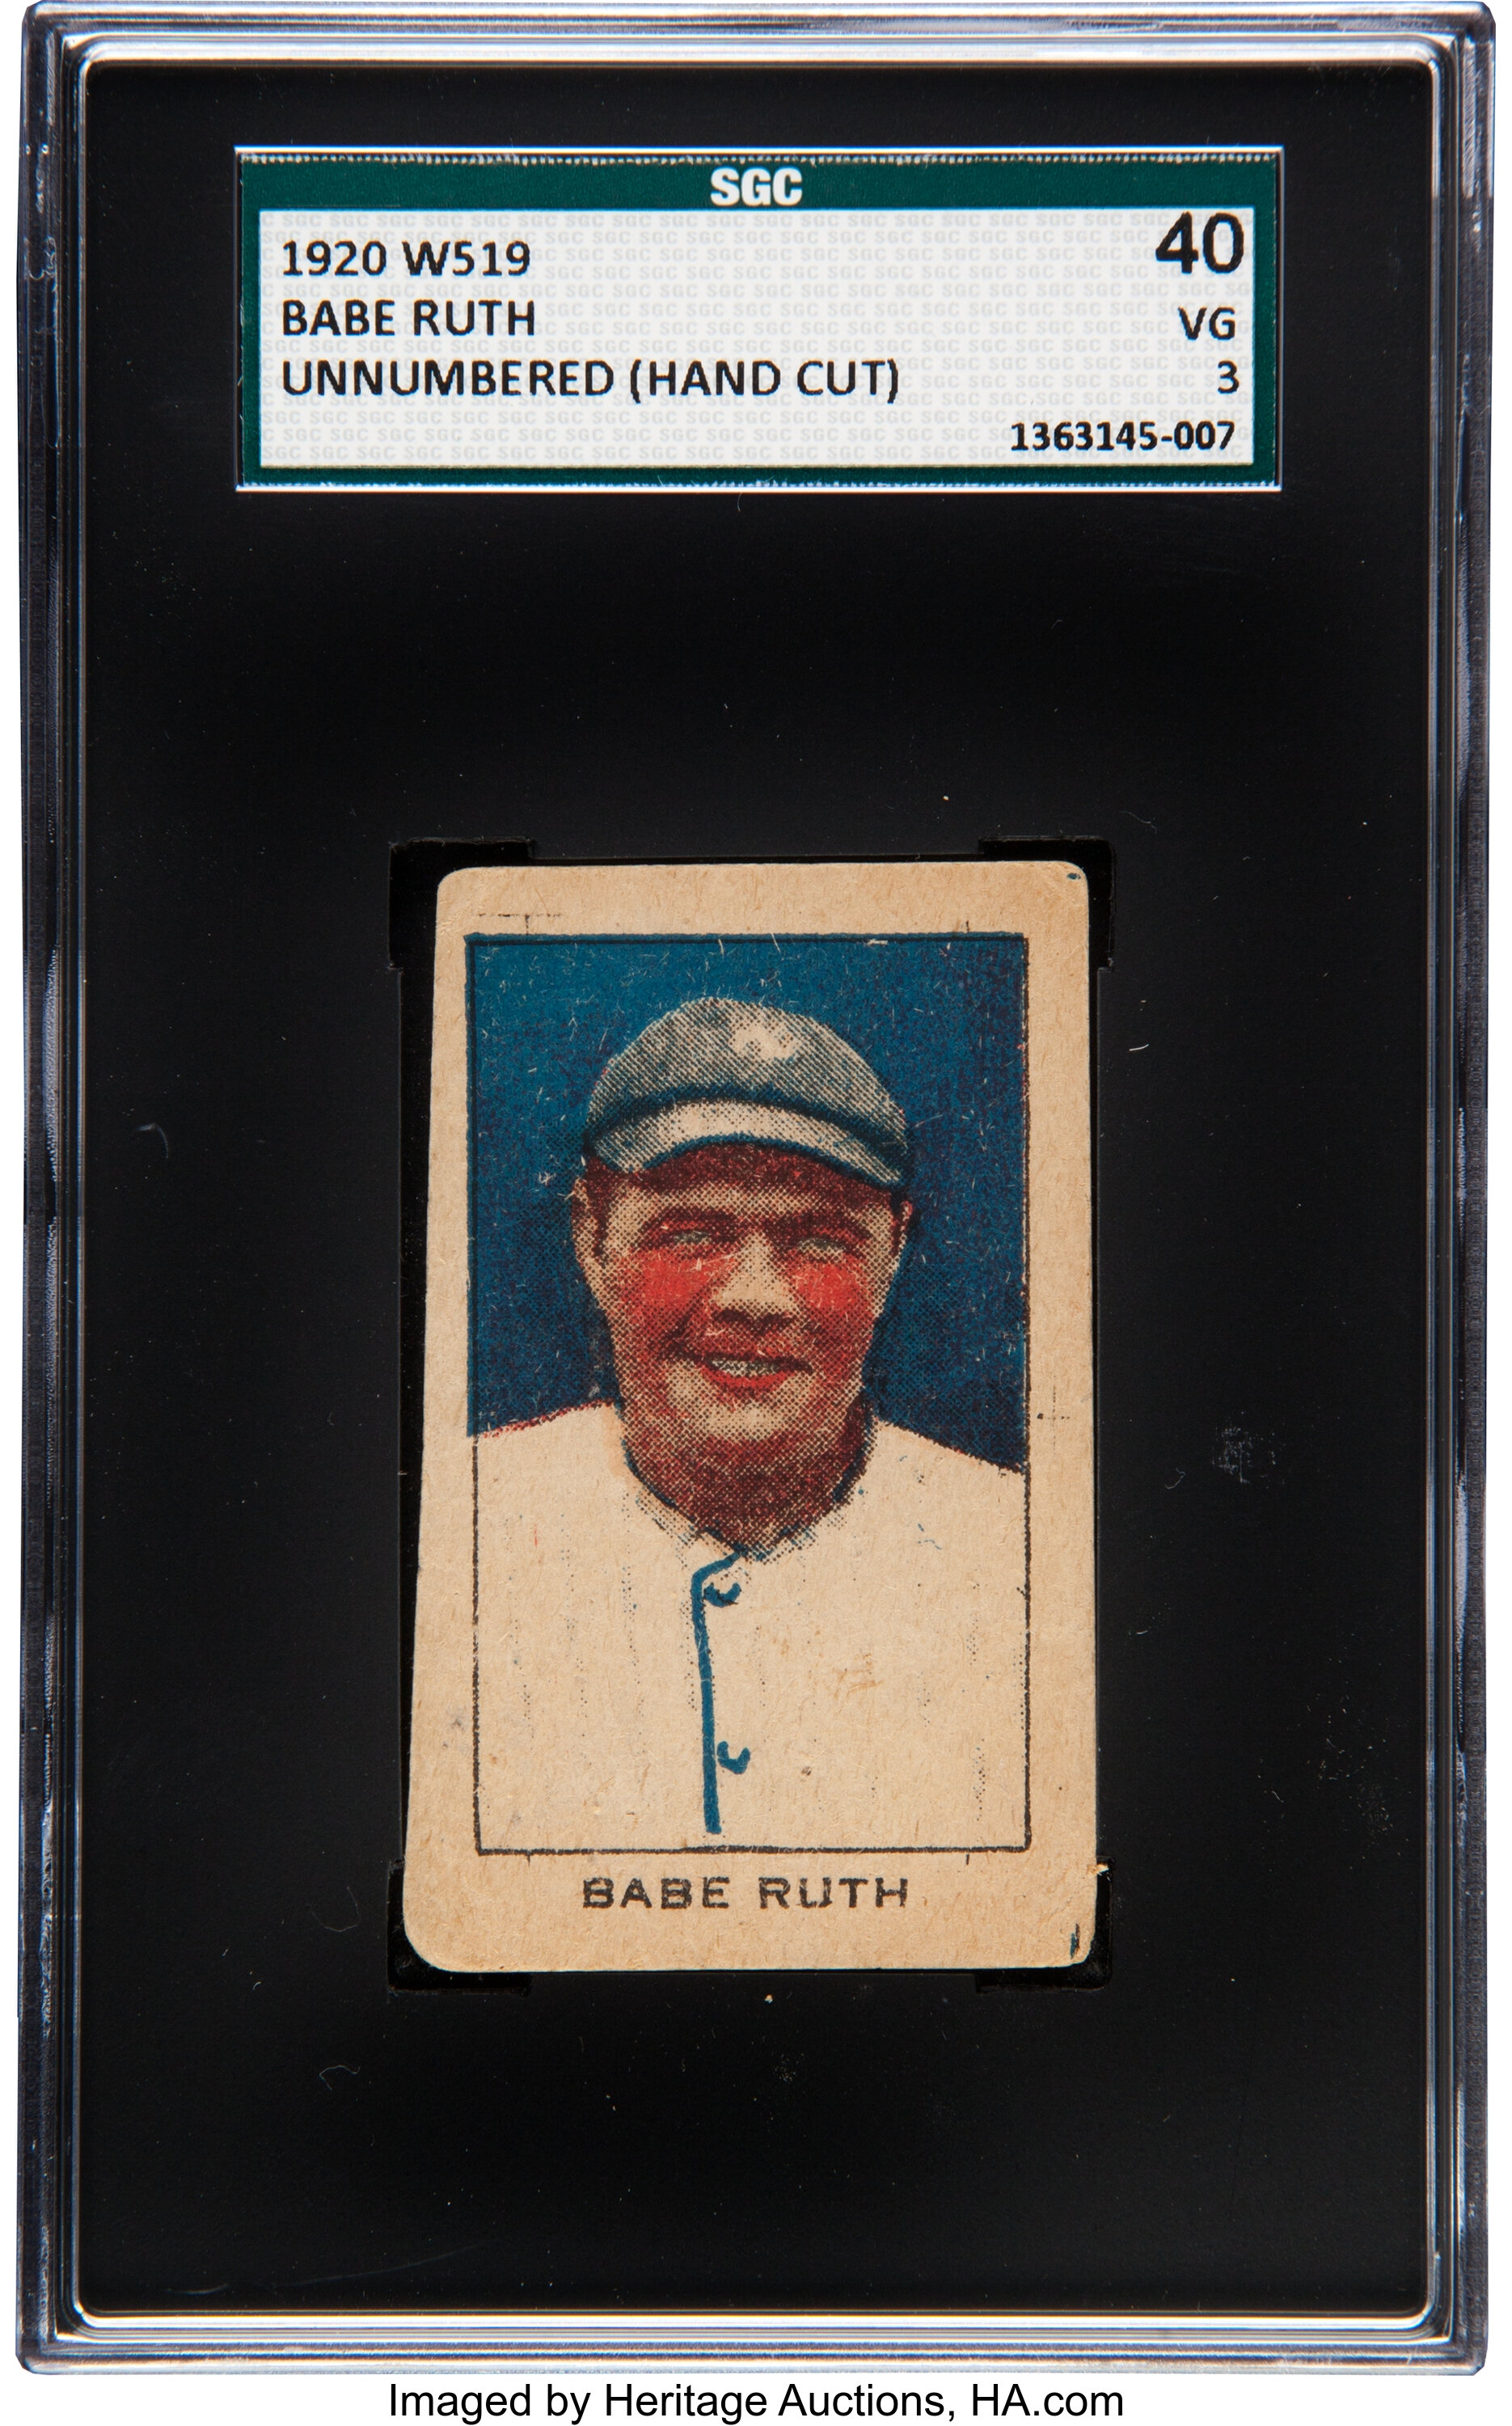 1920 W519 Type 1 Hand Cut Babe Ruth